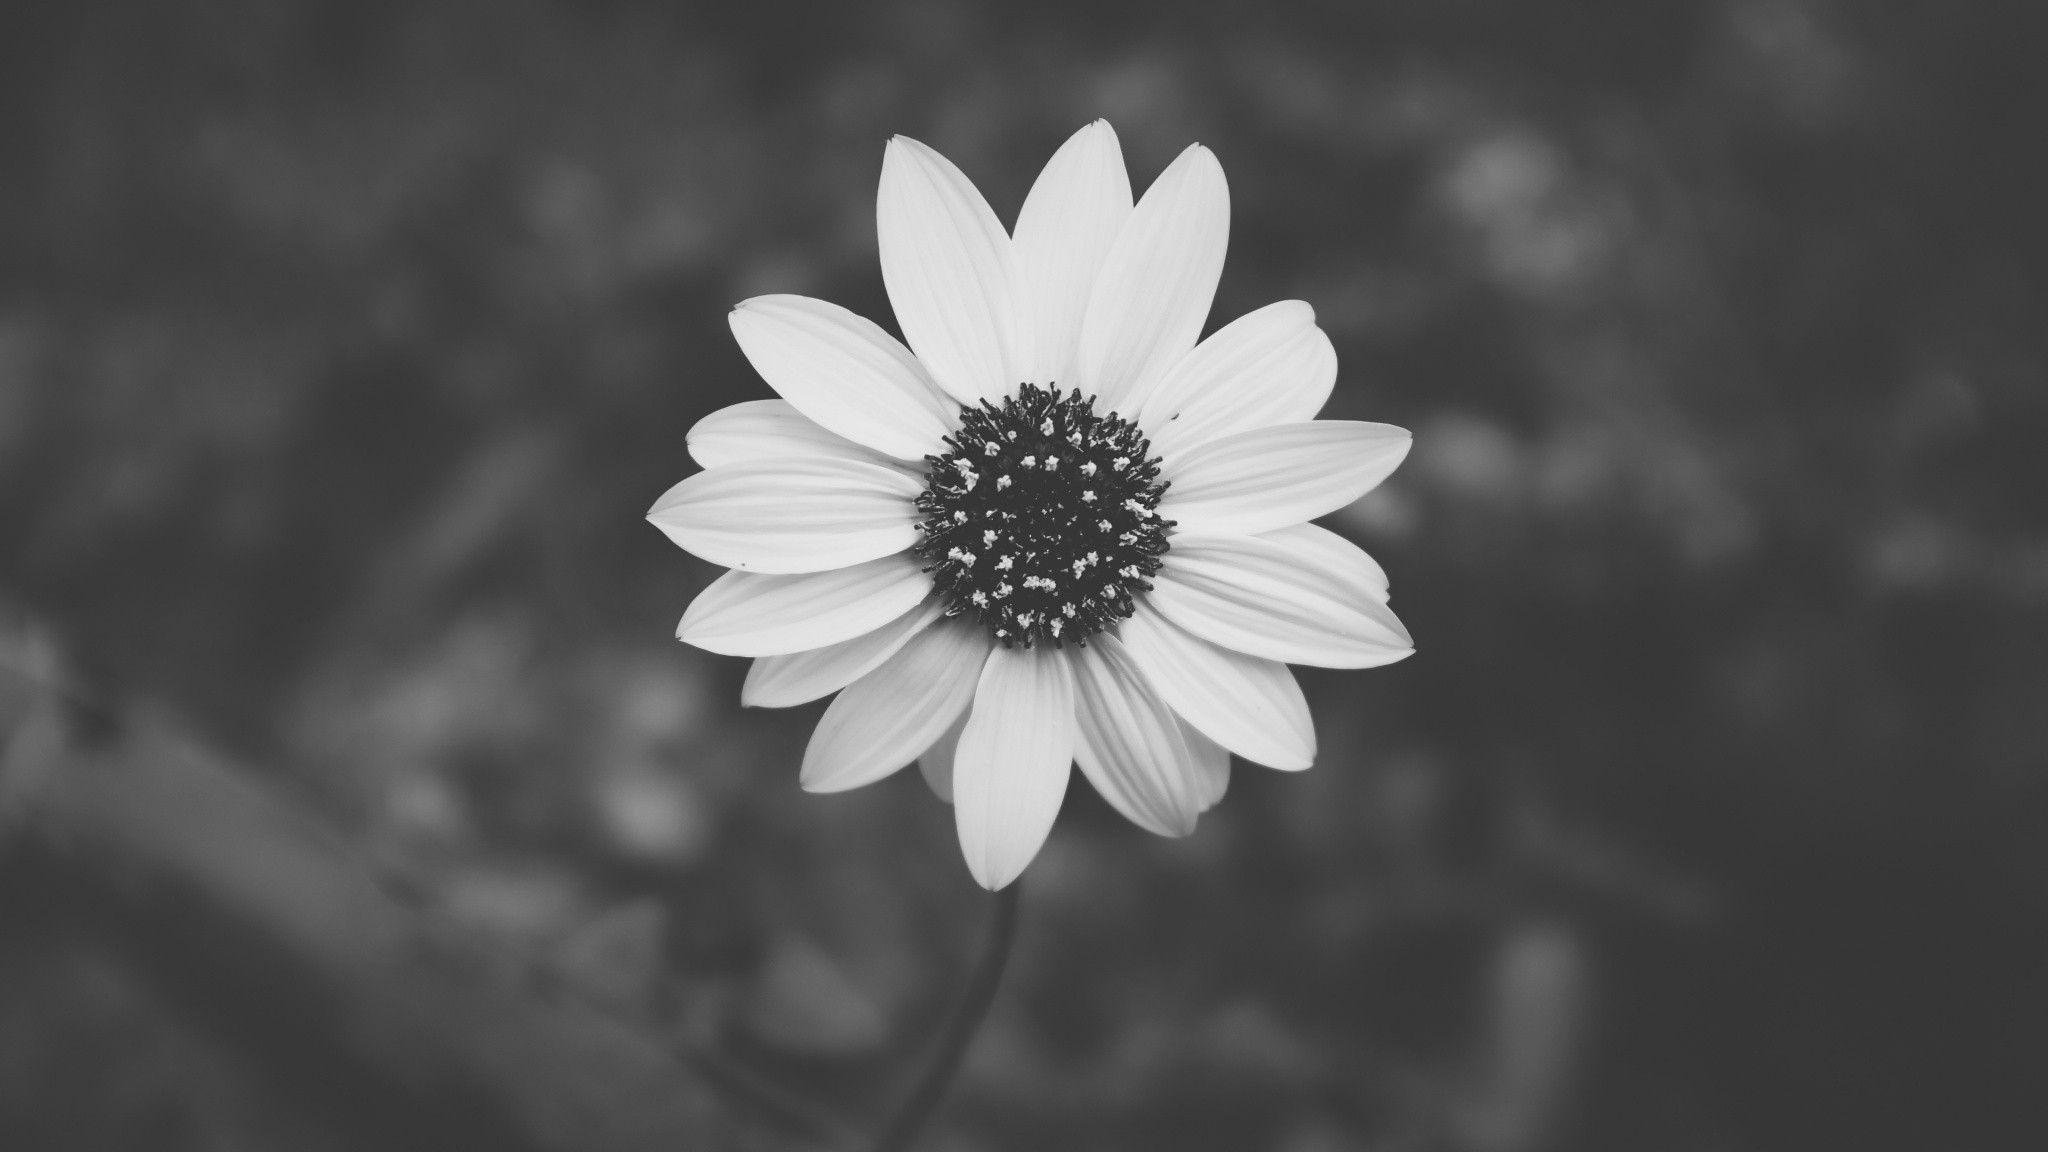 daisy tumblr backgrounds black